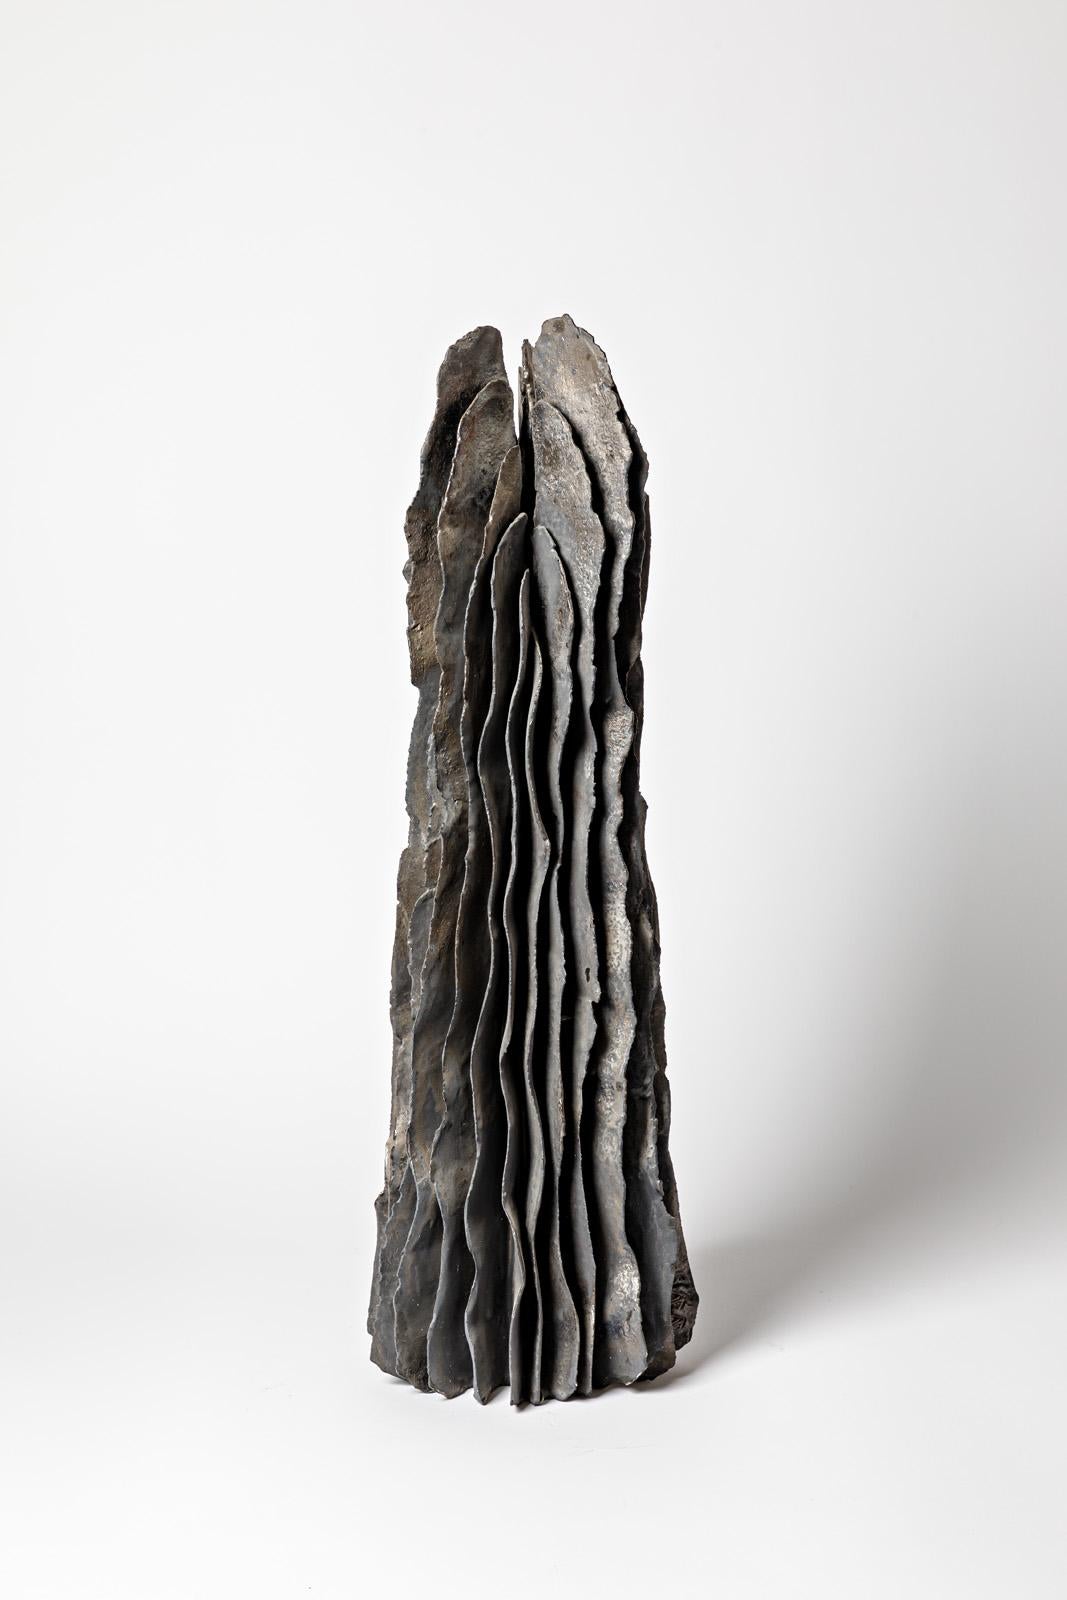 French Important Sculpture in Black Glazed Stoneware, Jean-Pierre Bonardot, 2022 For Sale